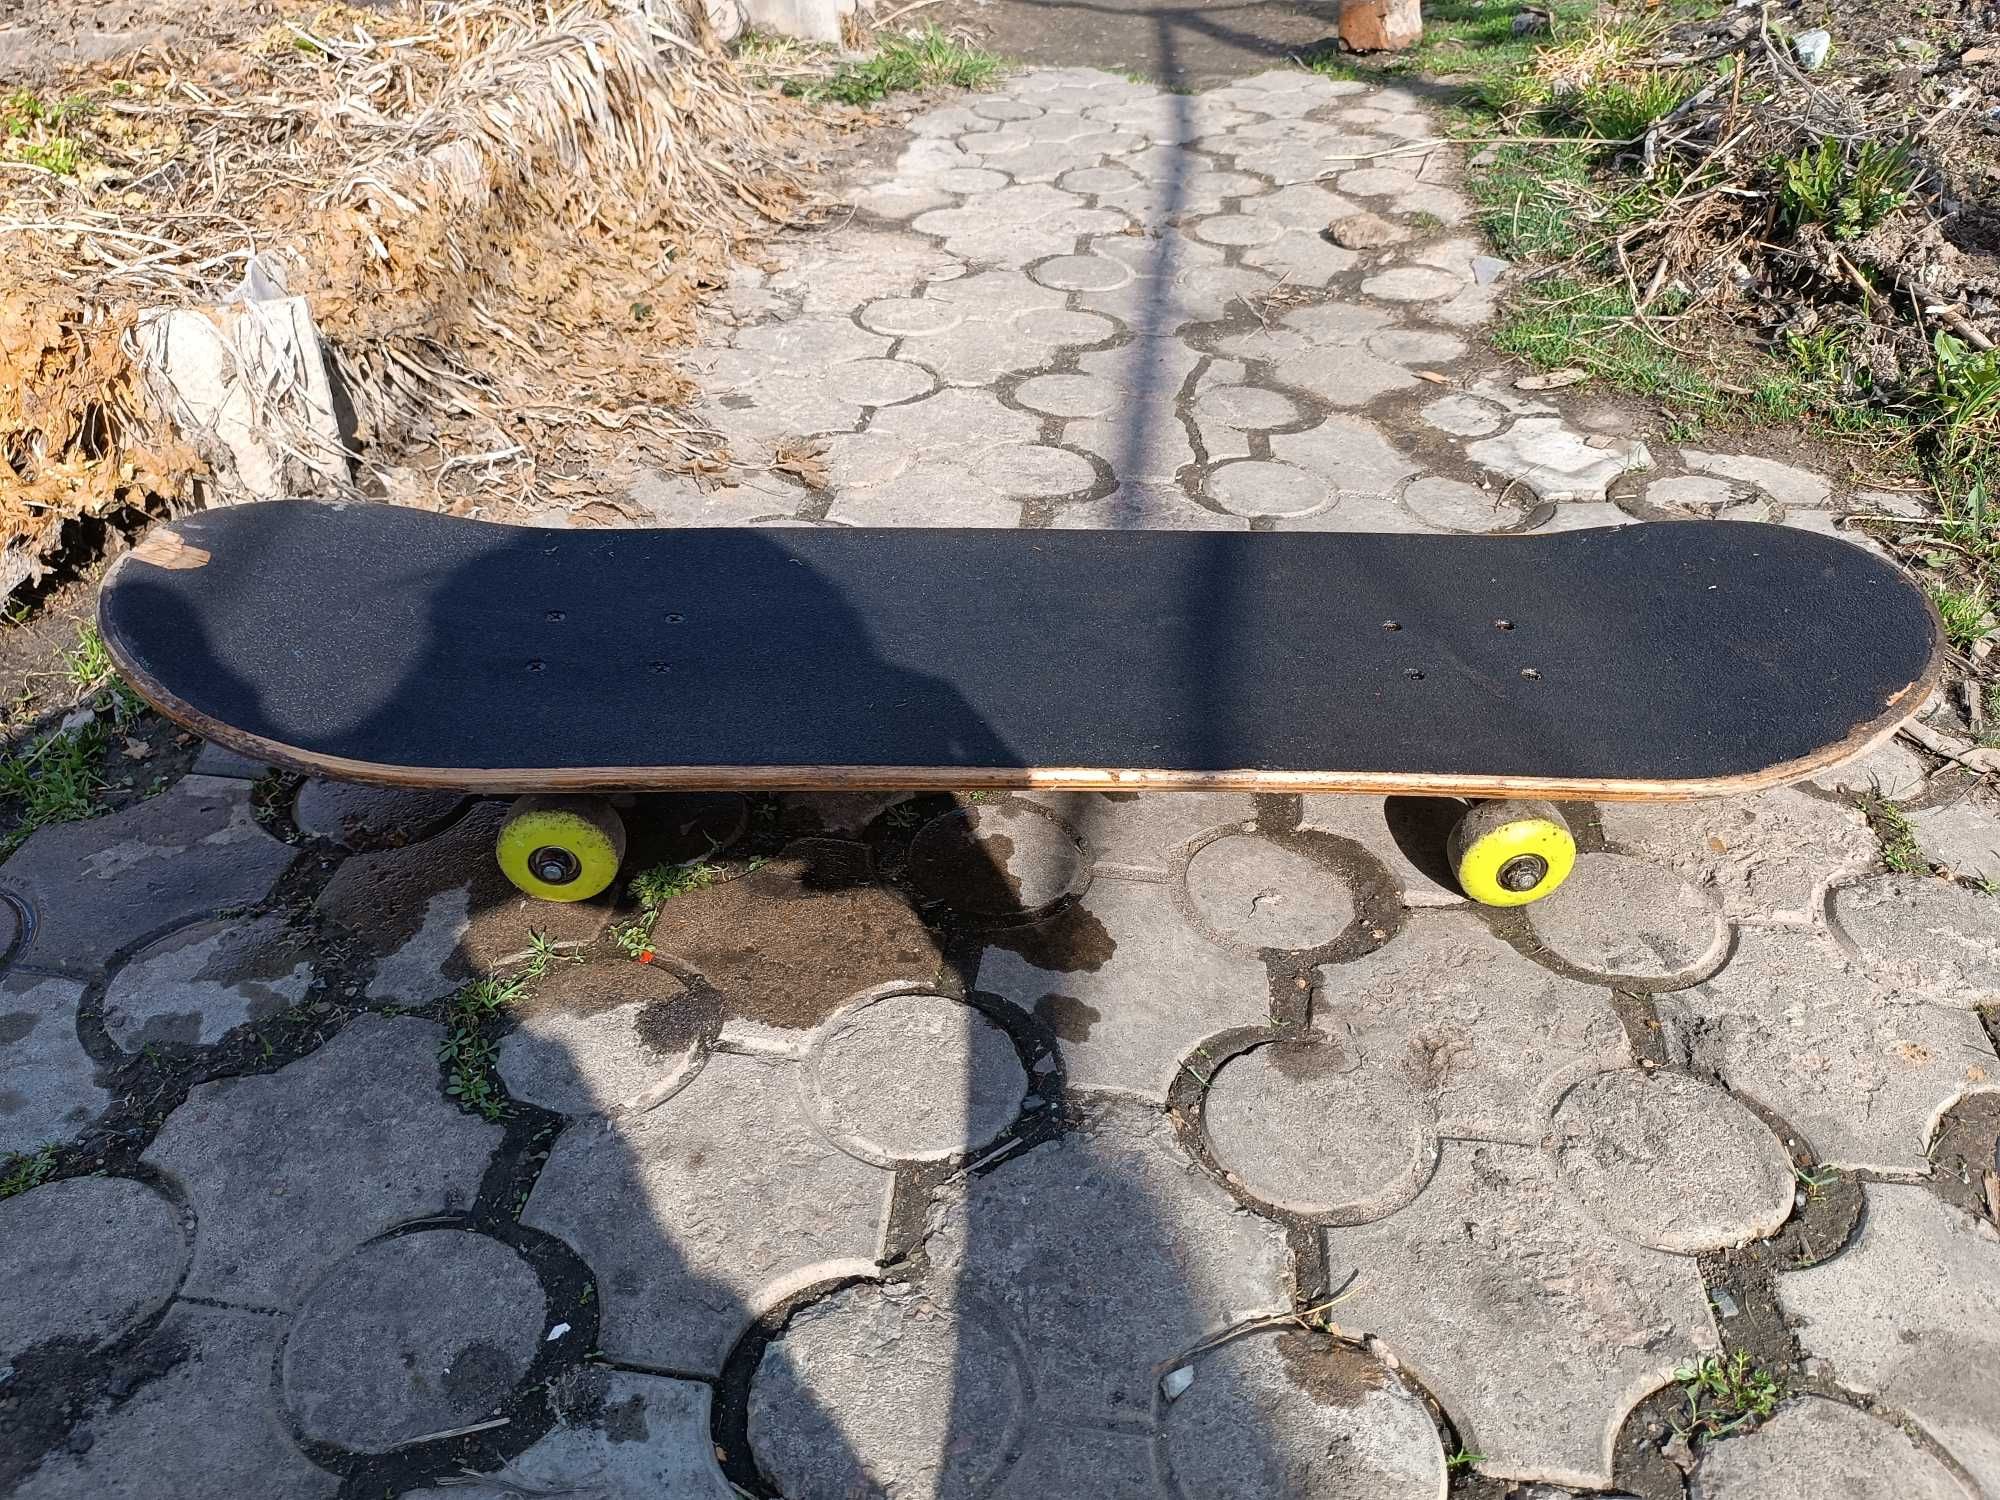 Скейтборд деревянный